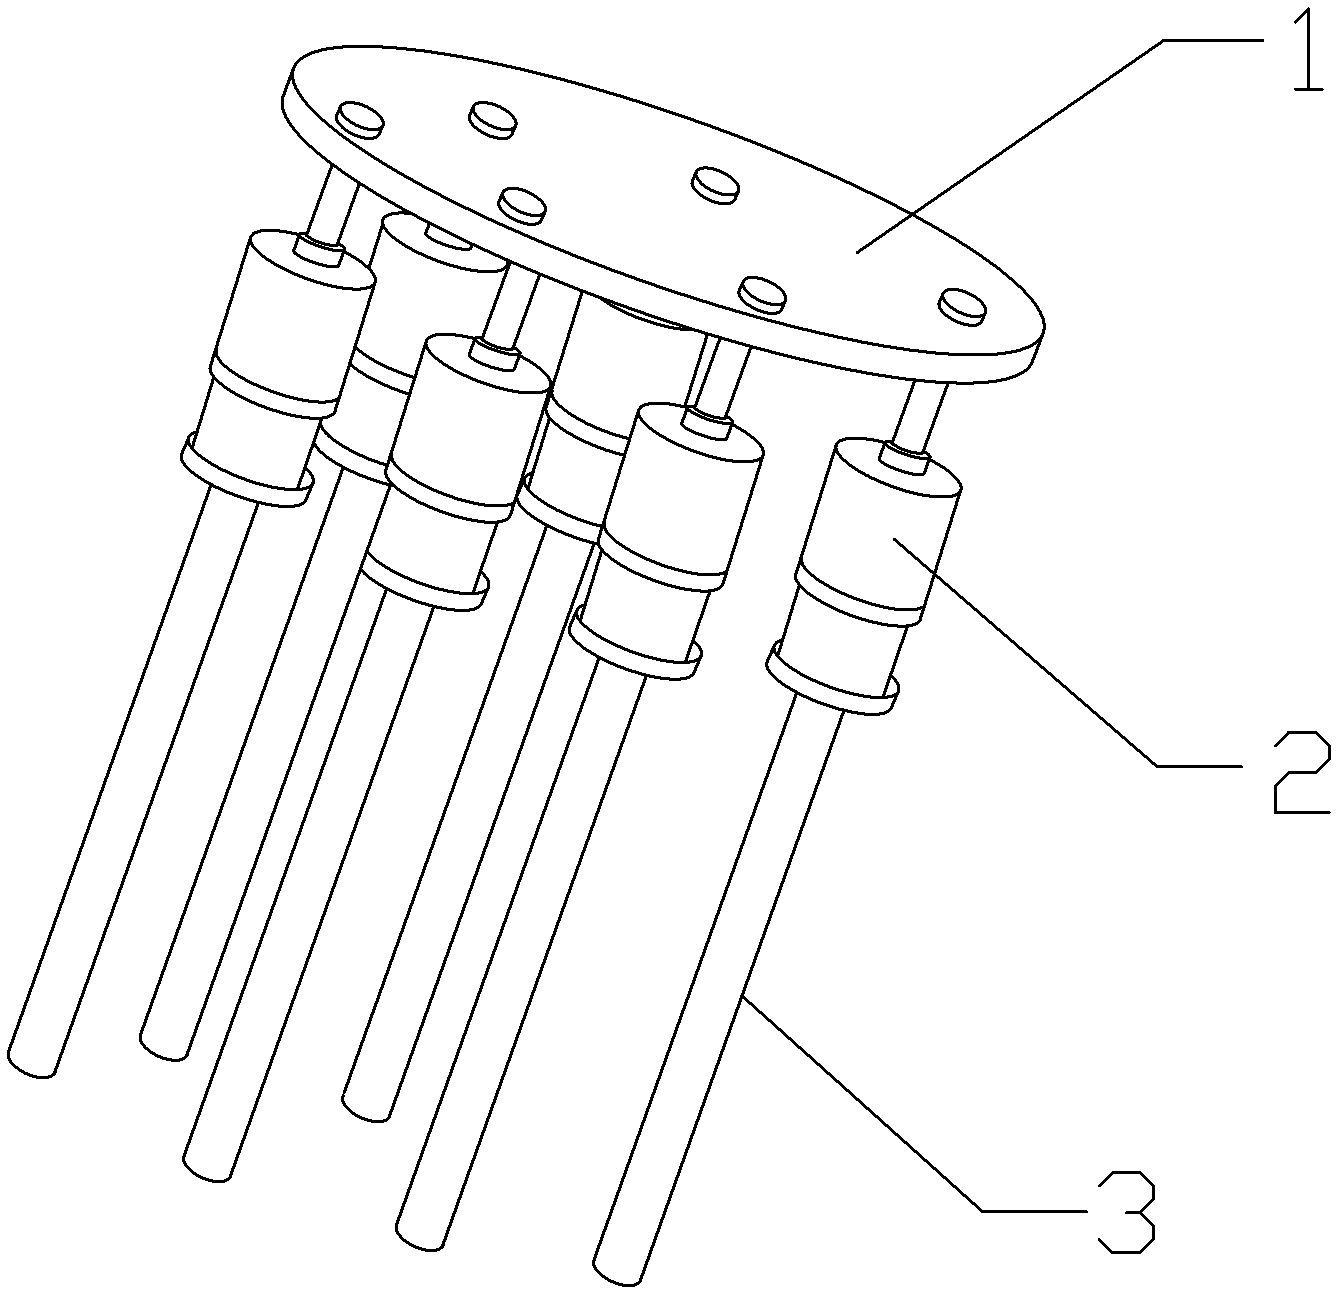 Coating process of carbon fiber fishing rod